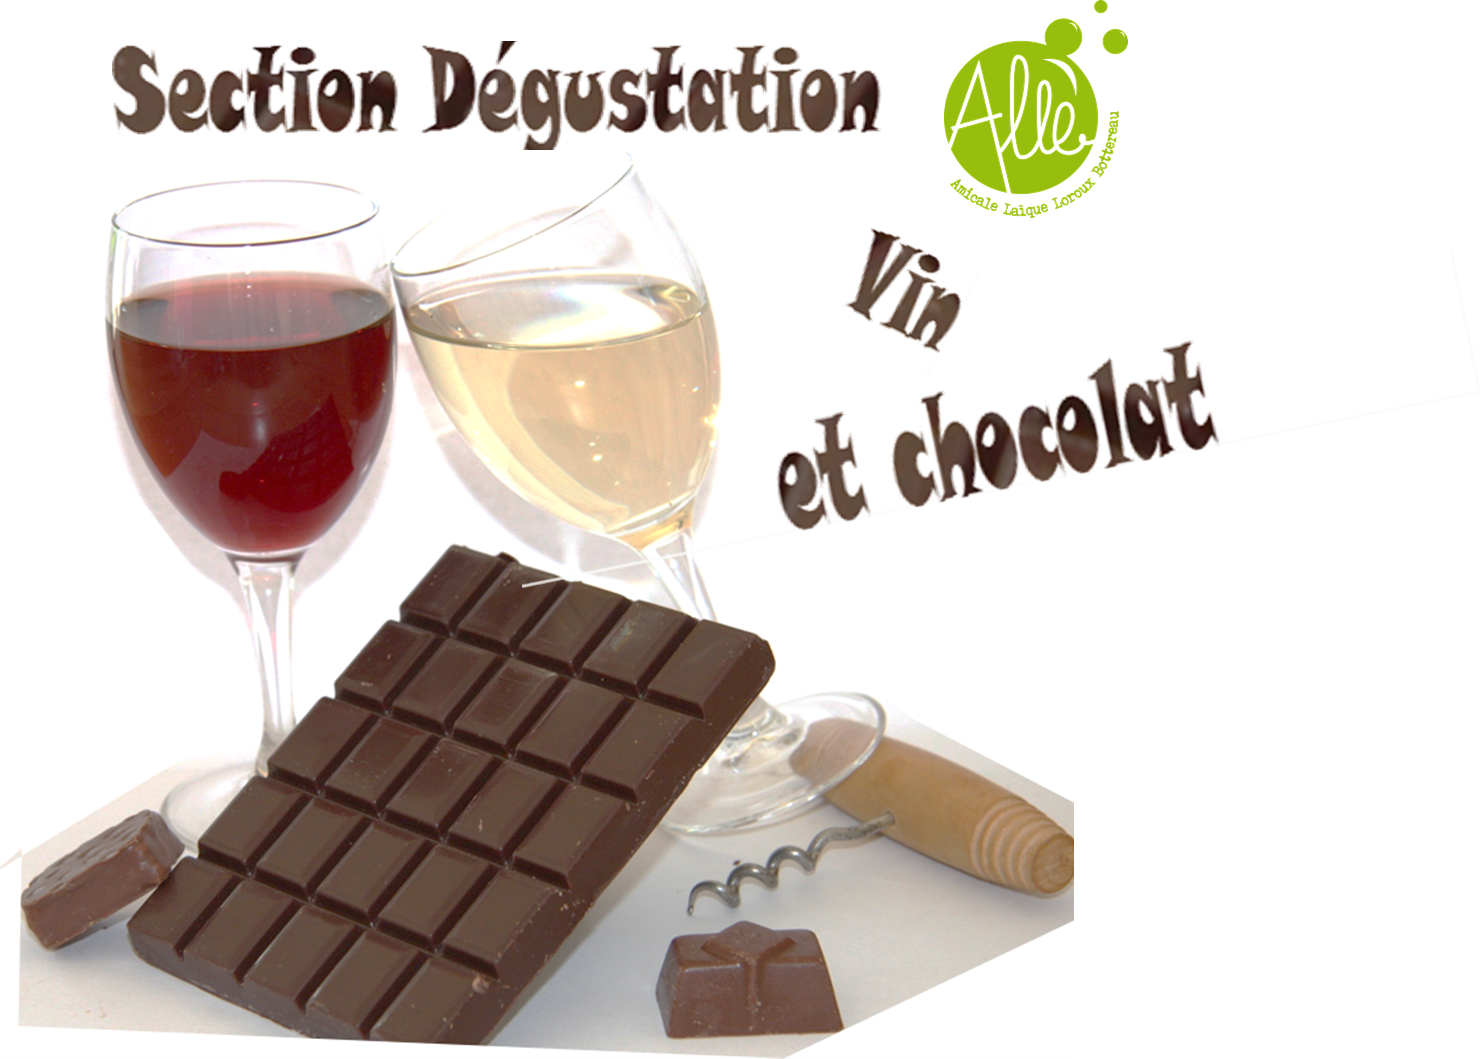 logo section vin et chocolat